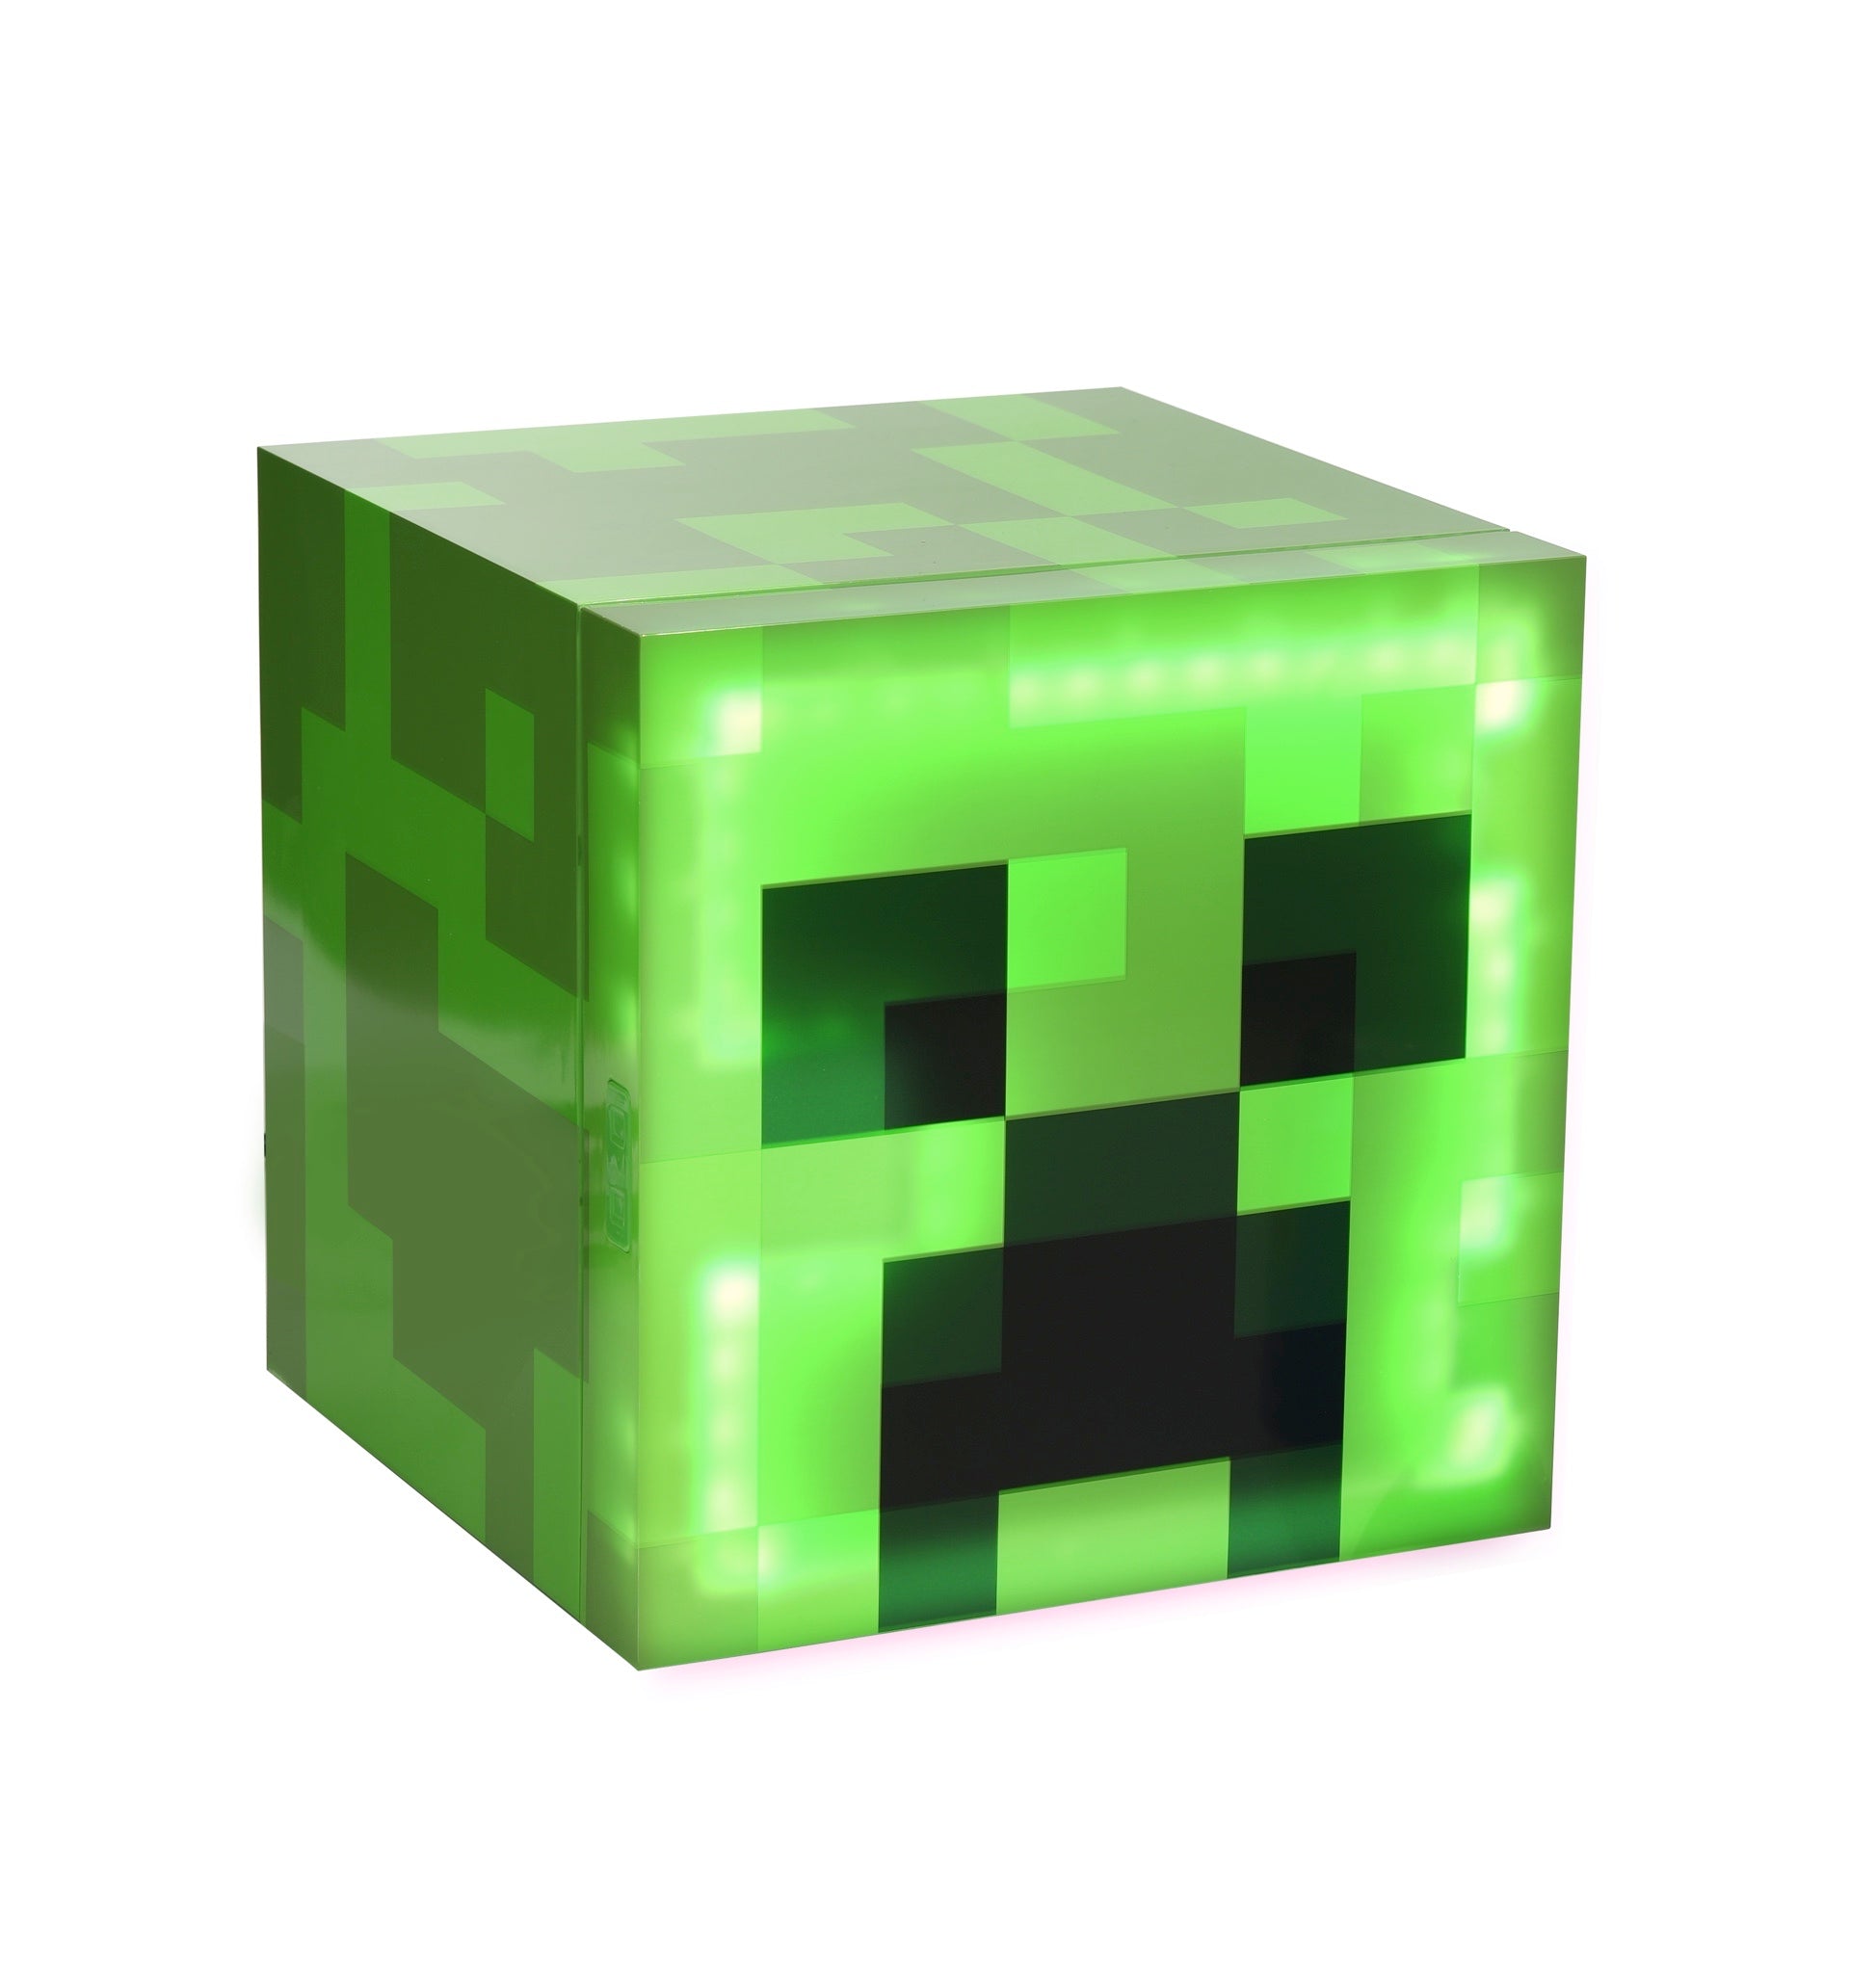 Xbox Has Released A Minecraft 'Creeper' Themed Mini Fridge